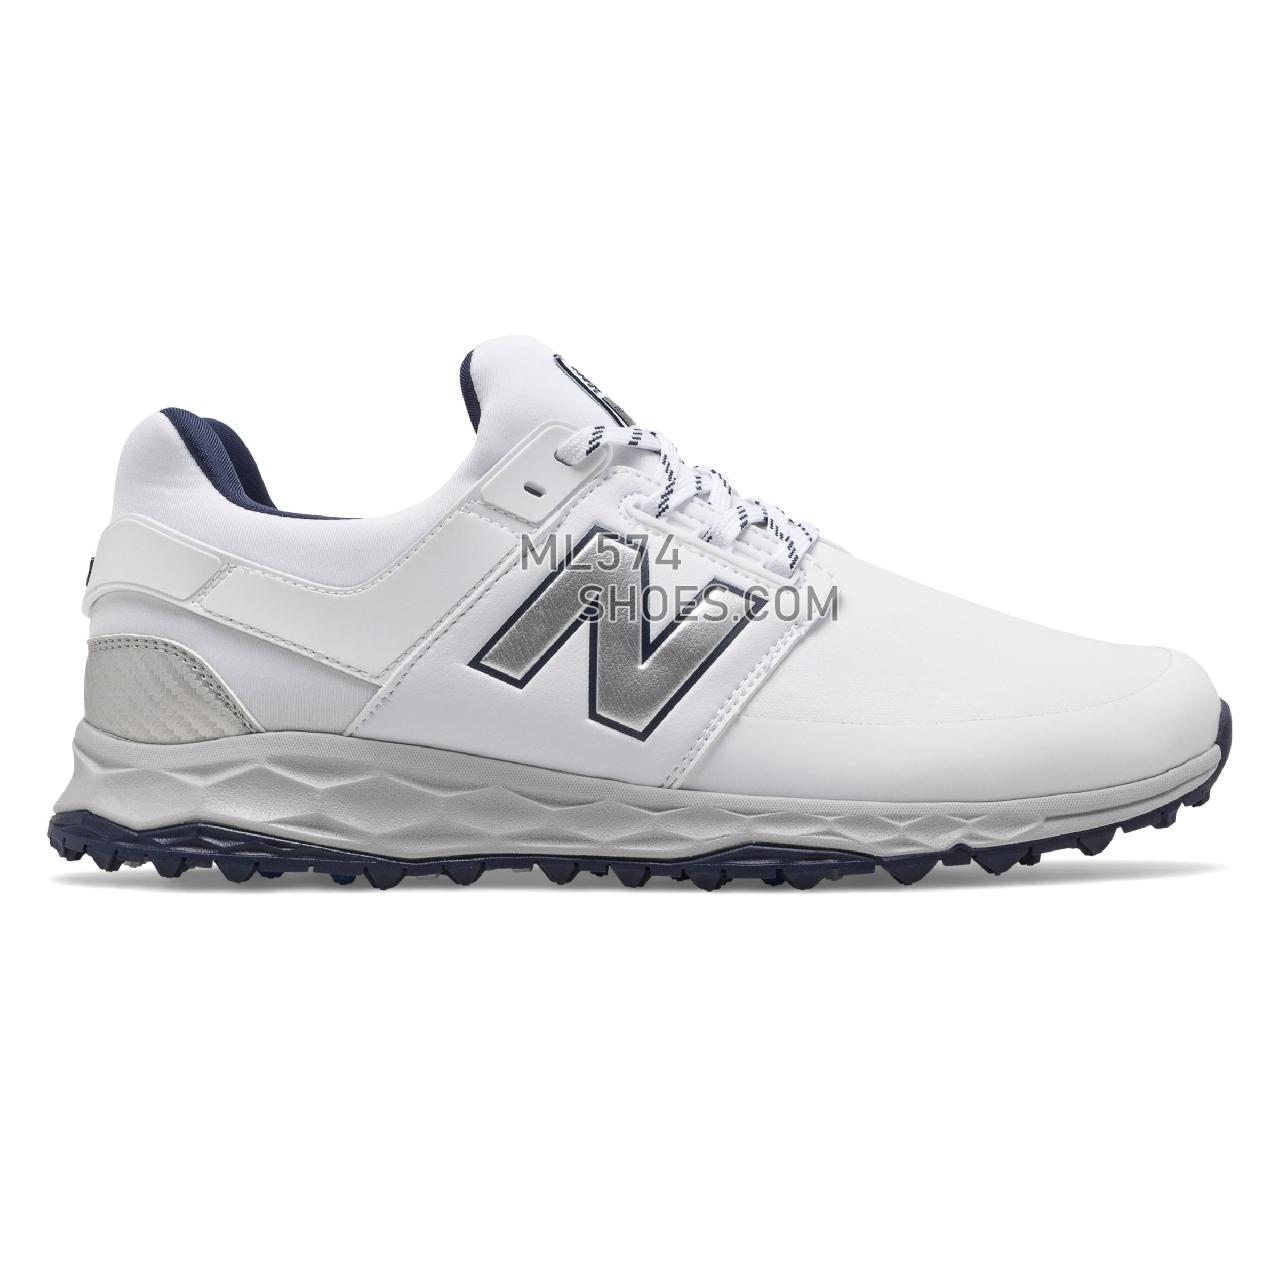 New Balance Fresh Foam LinksSL - Men's Golf - White with Navy - NBG4000WN